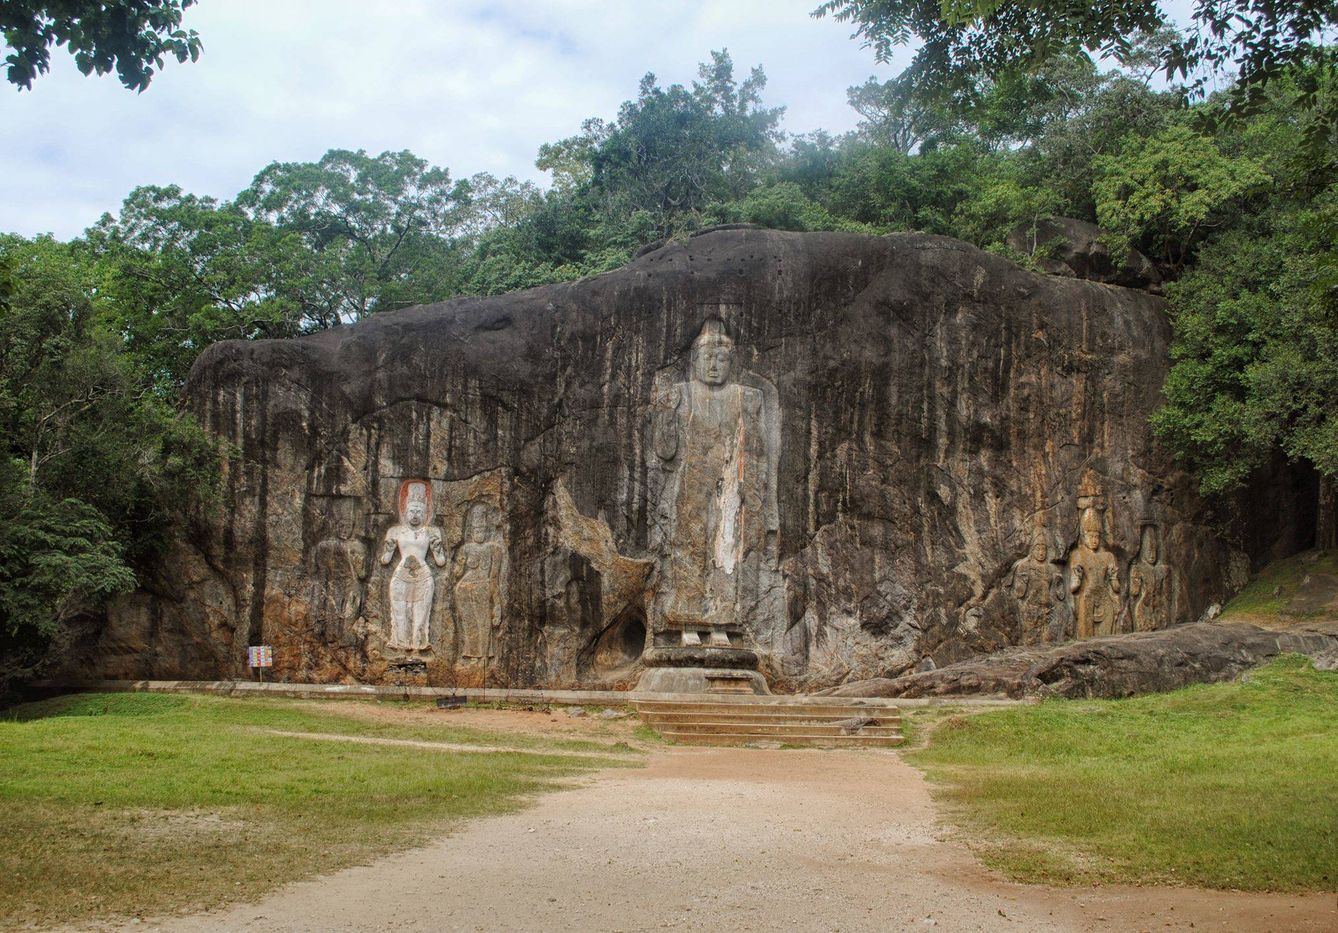 Buda gigante de Buduruwagala. (CC)